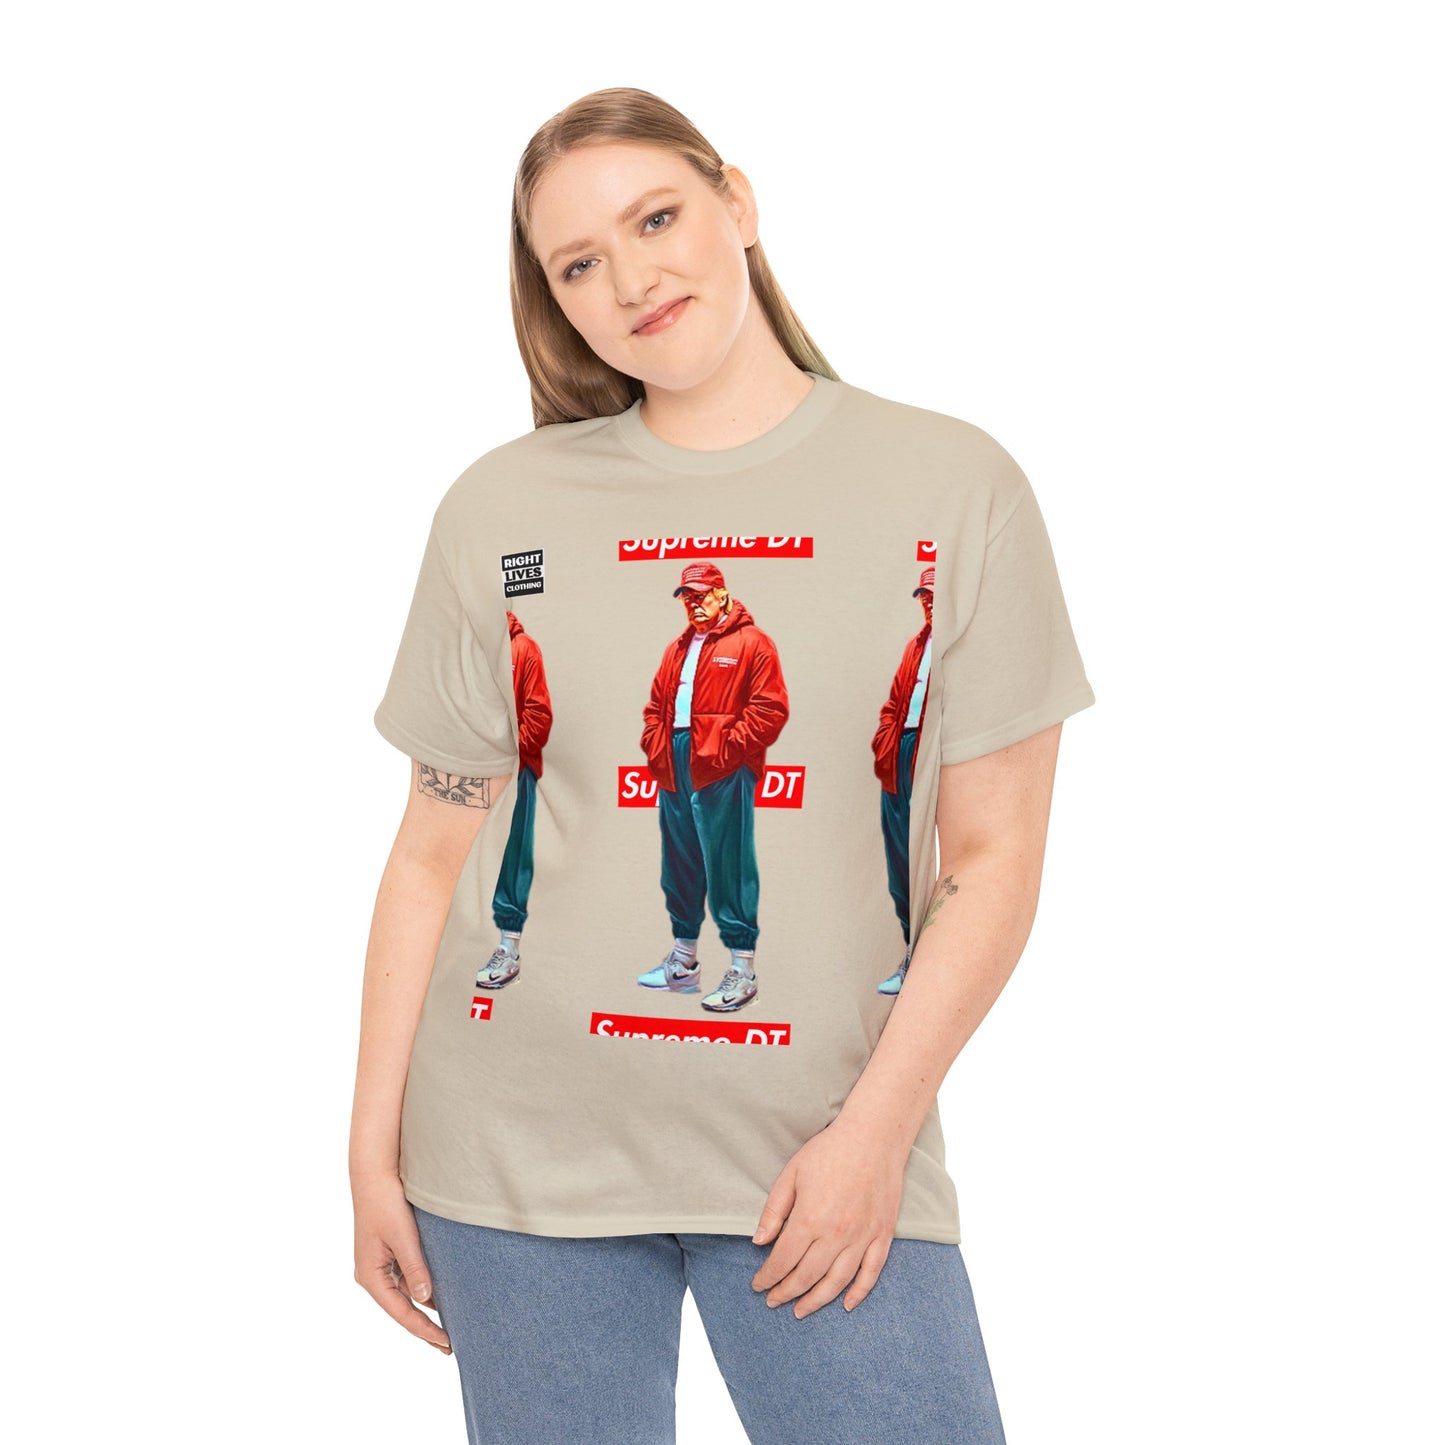 Super Supreme street Donald Trump T-Shirt